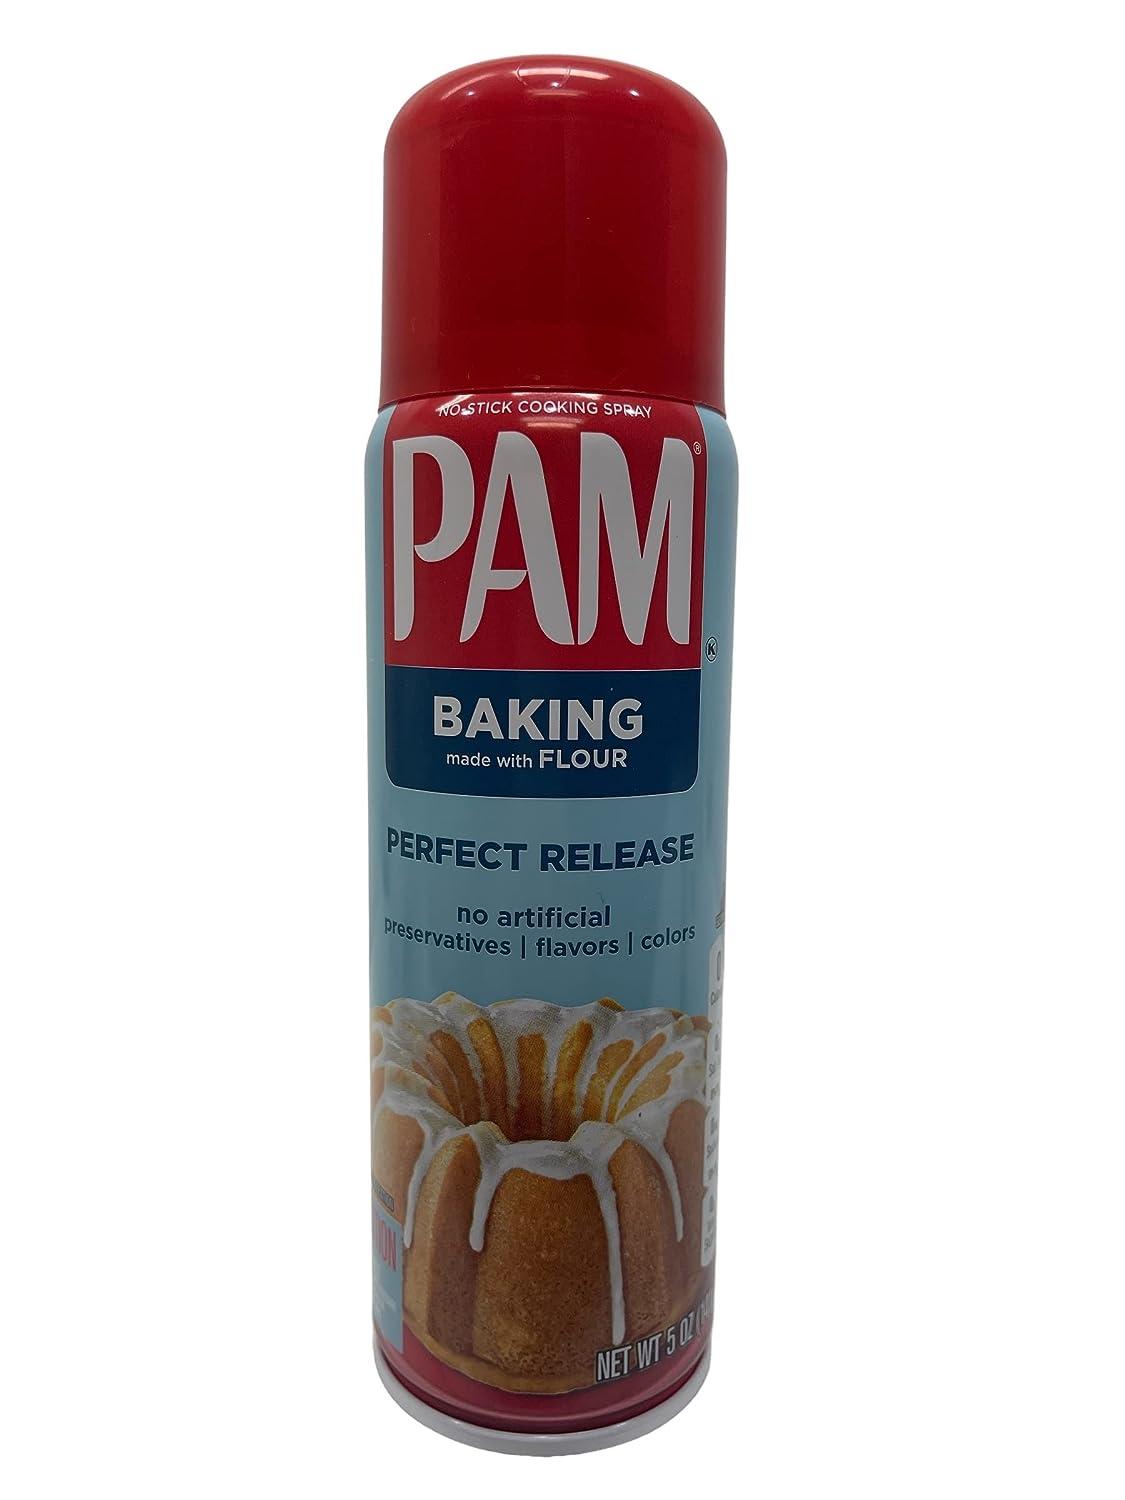  PAM Non Stick Original Cooking Spray, 6 oz : Grocery & Gourmet  Food